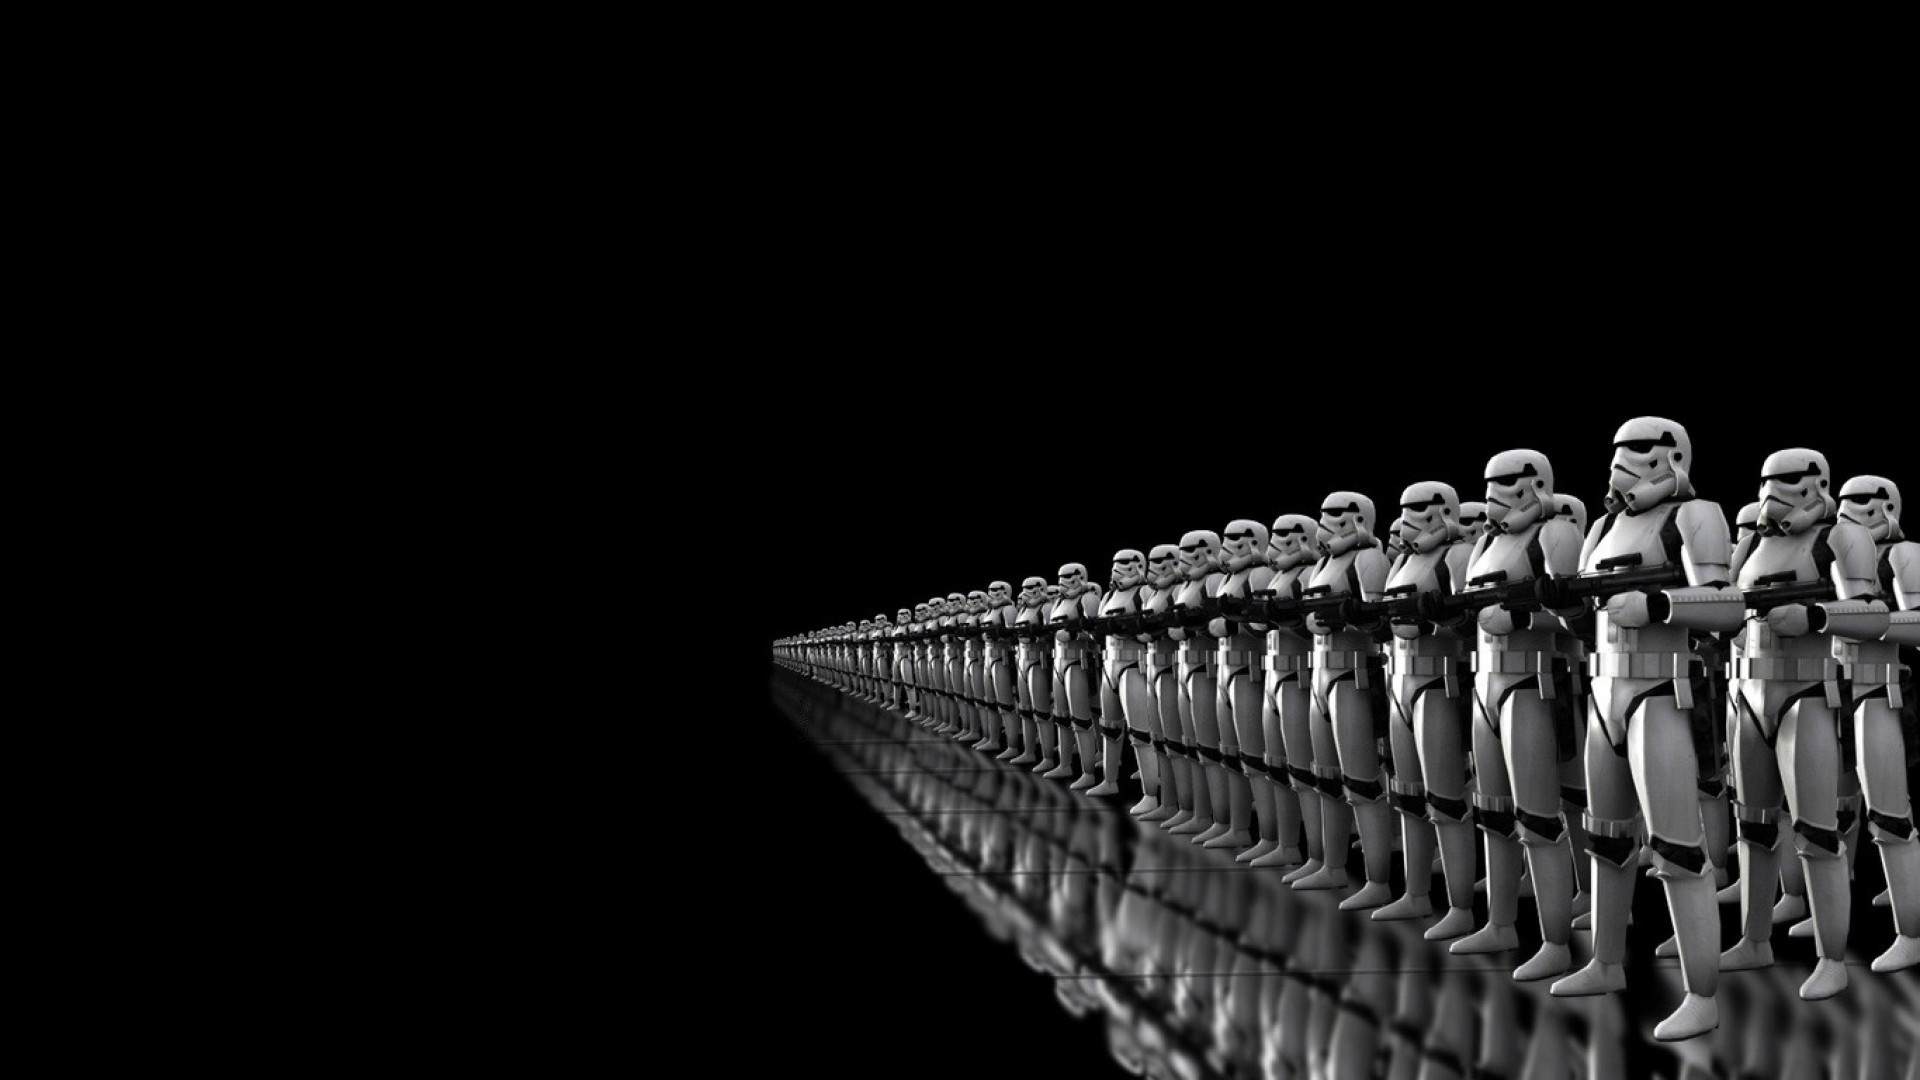 Star Wars Empire Pictures For Desktop Wallpaper 1920 x 1080 px 623.08 KB  lightsaber clone troopers